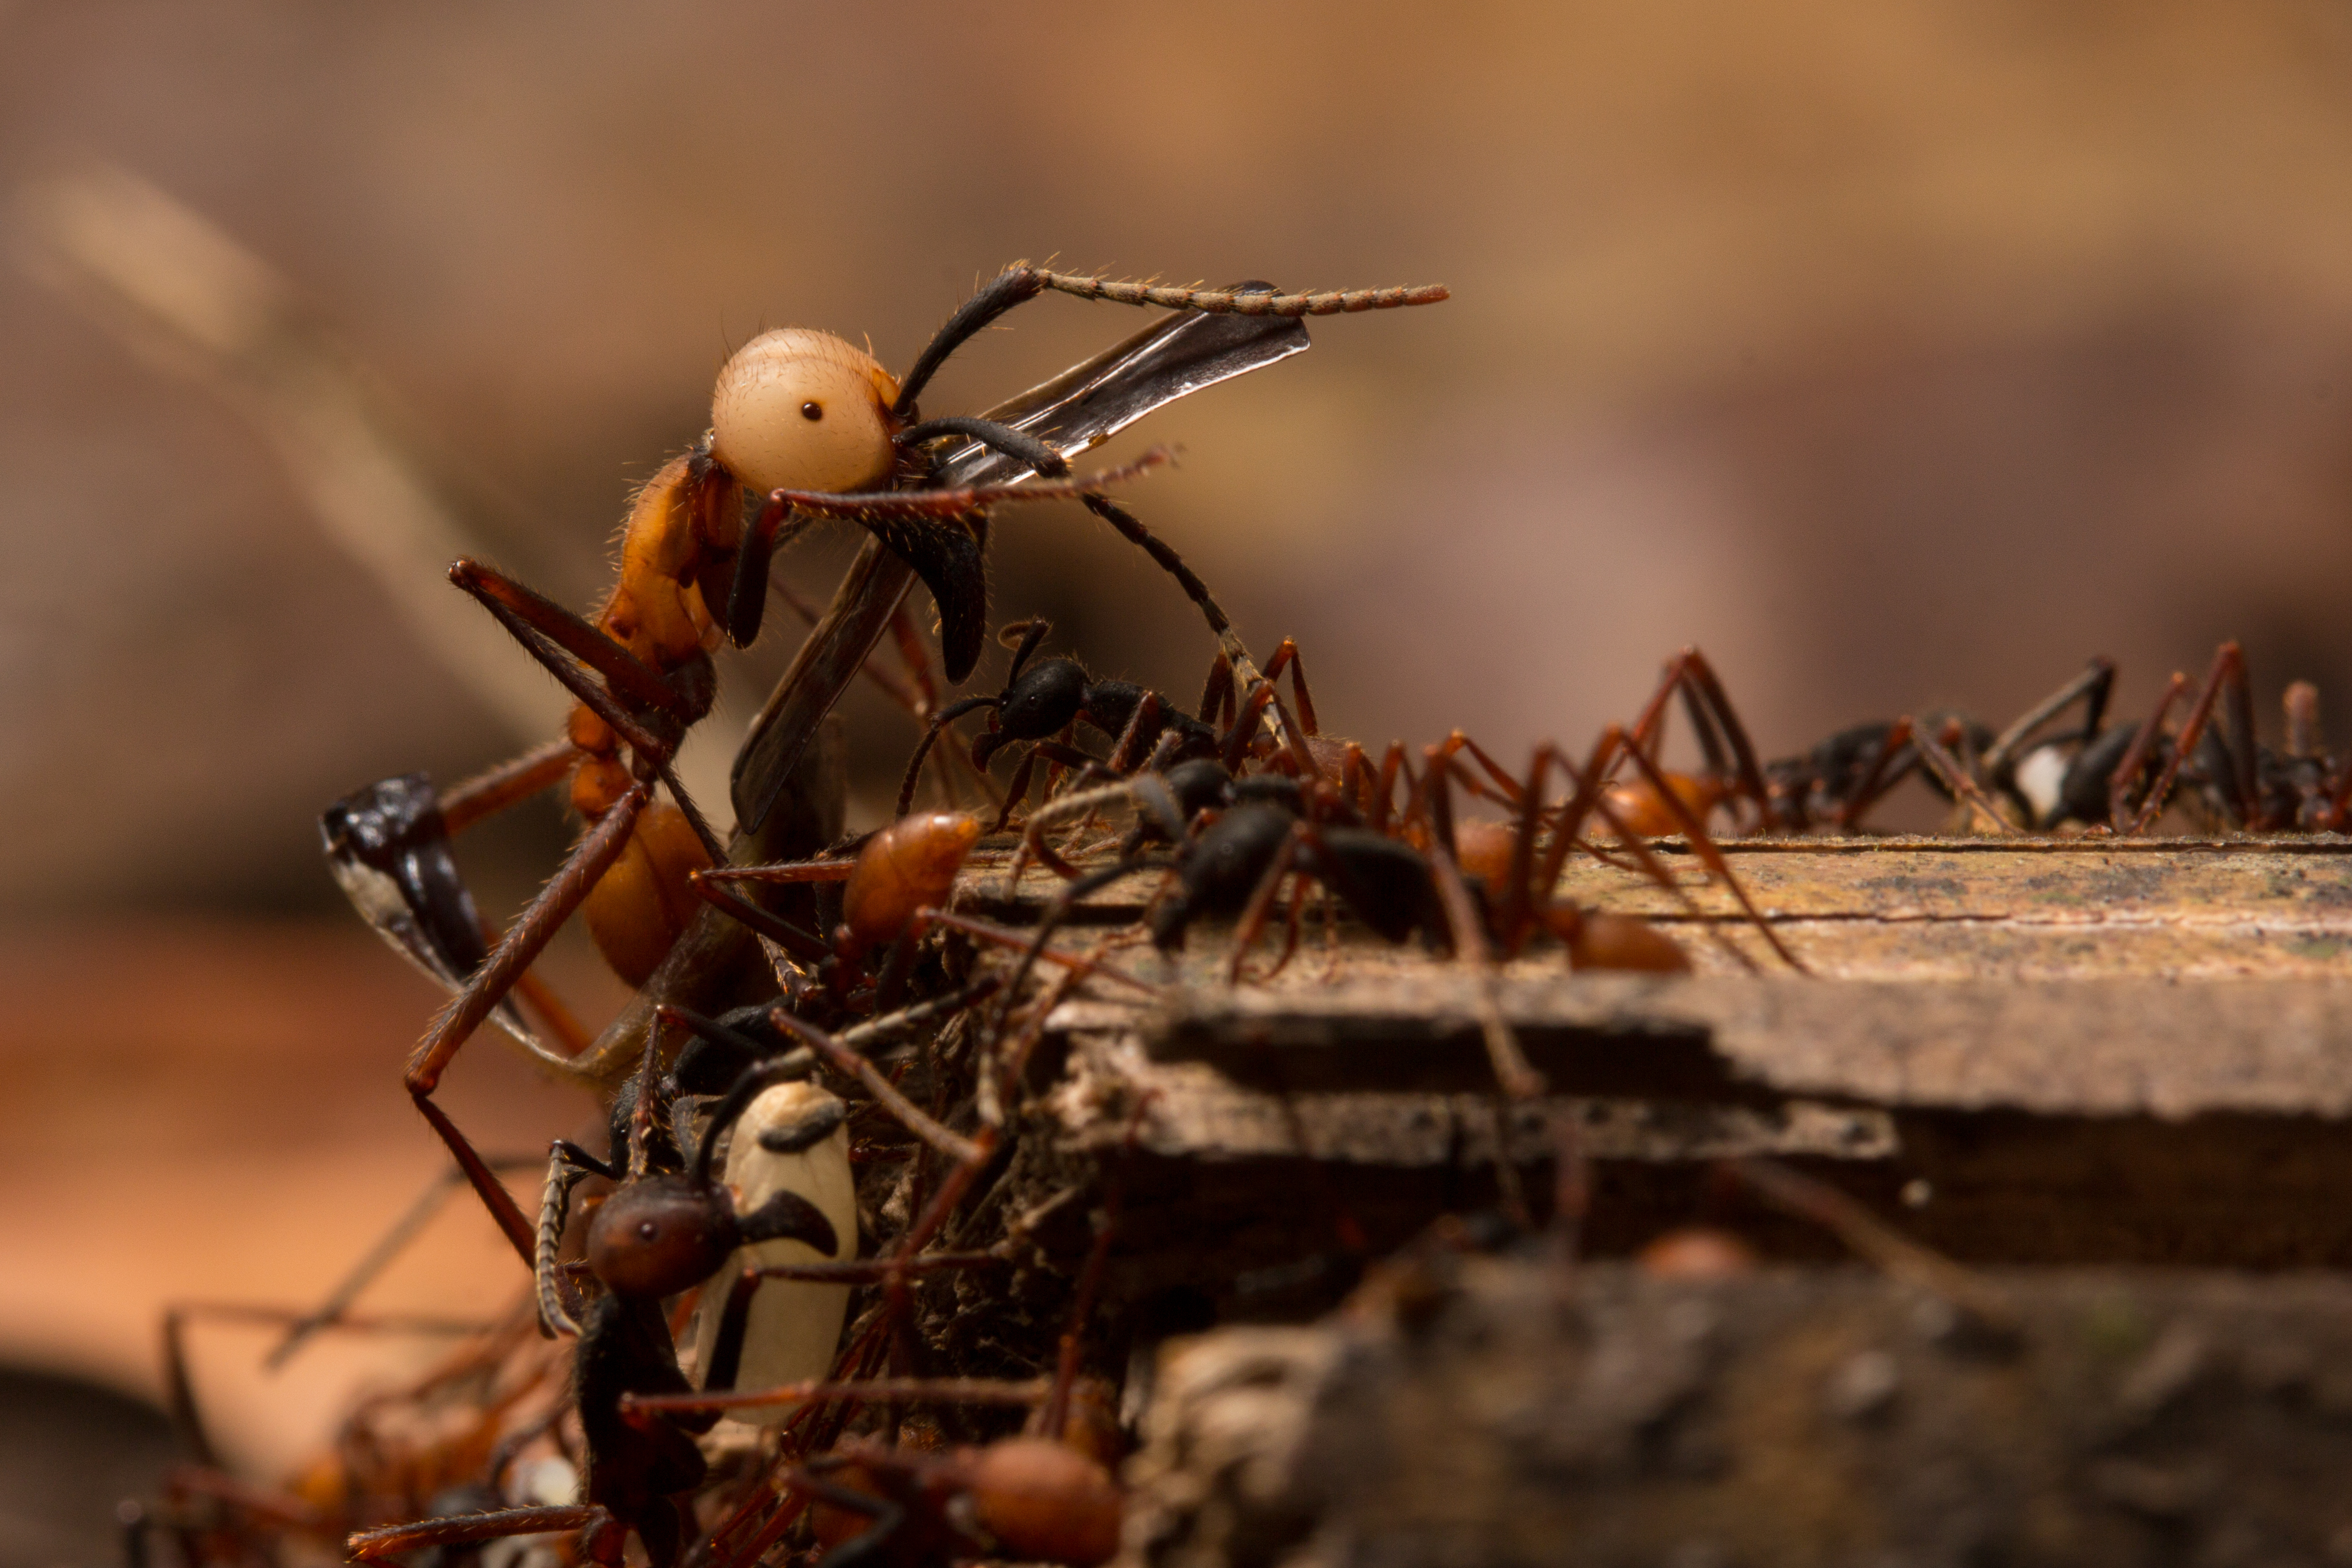 Название армейского муравья. Dorylus муравьи. Муравьи кочевники. Муравей Эцитон. Армейские муравьи.